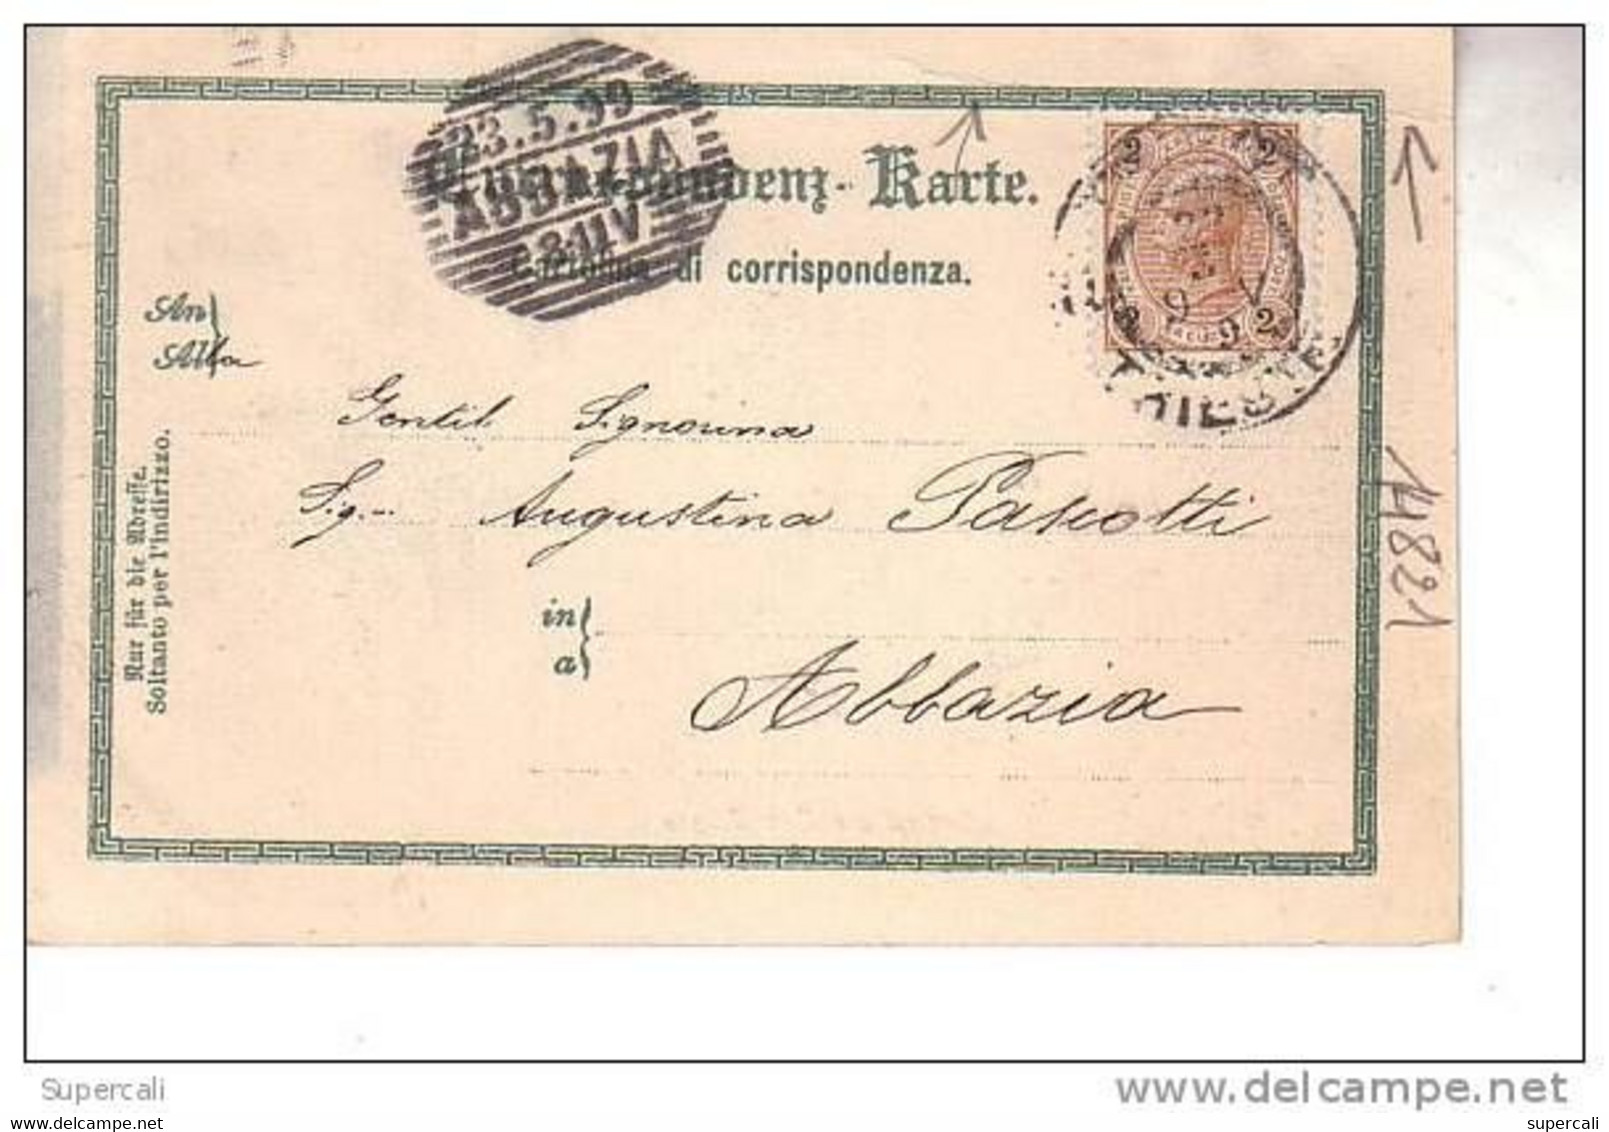 REF14.820    ITALIE. SALUTI  DA TRIESTE  CATHEDRALE SAN GUISTO  23/05/1899 - Trieste